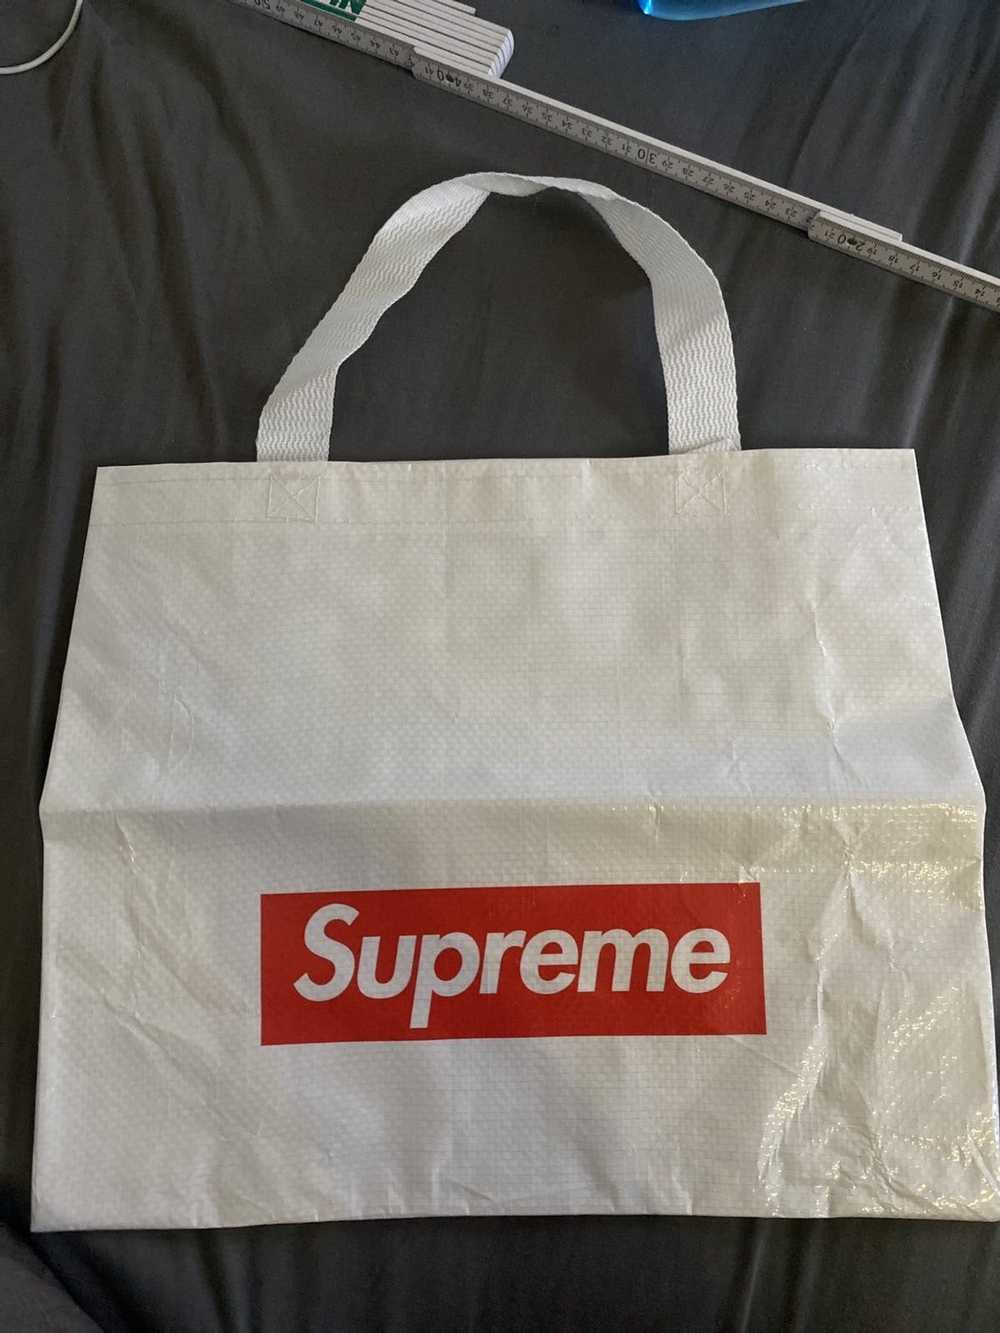 Supreme Supreme Bag, Milan - image 1